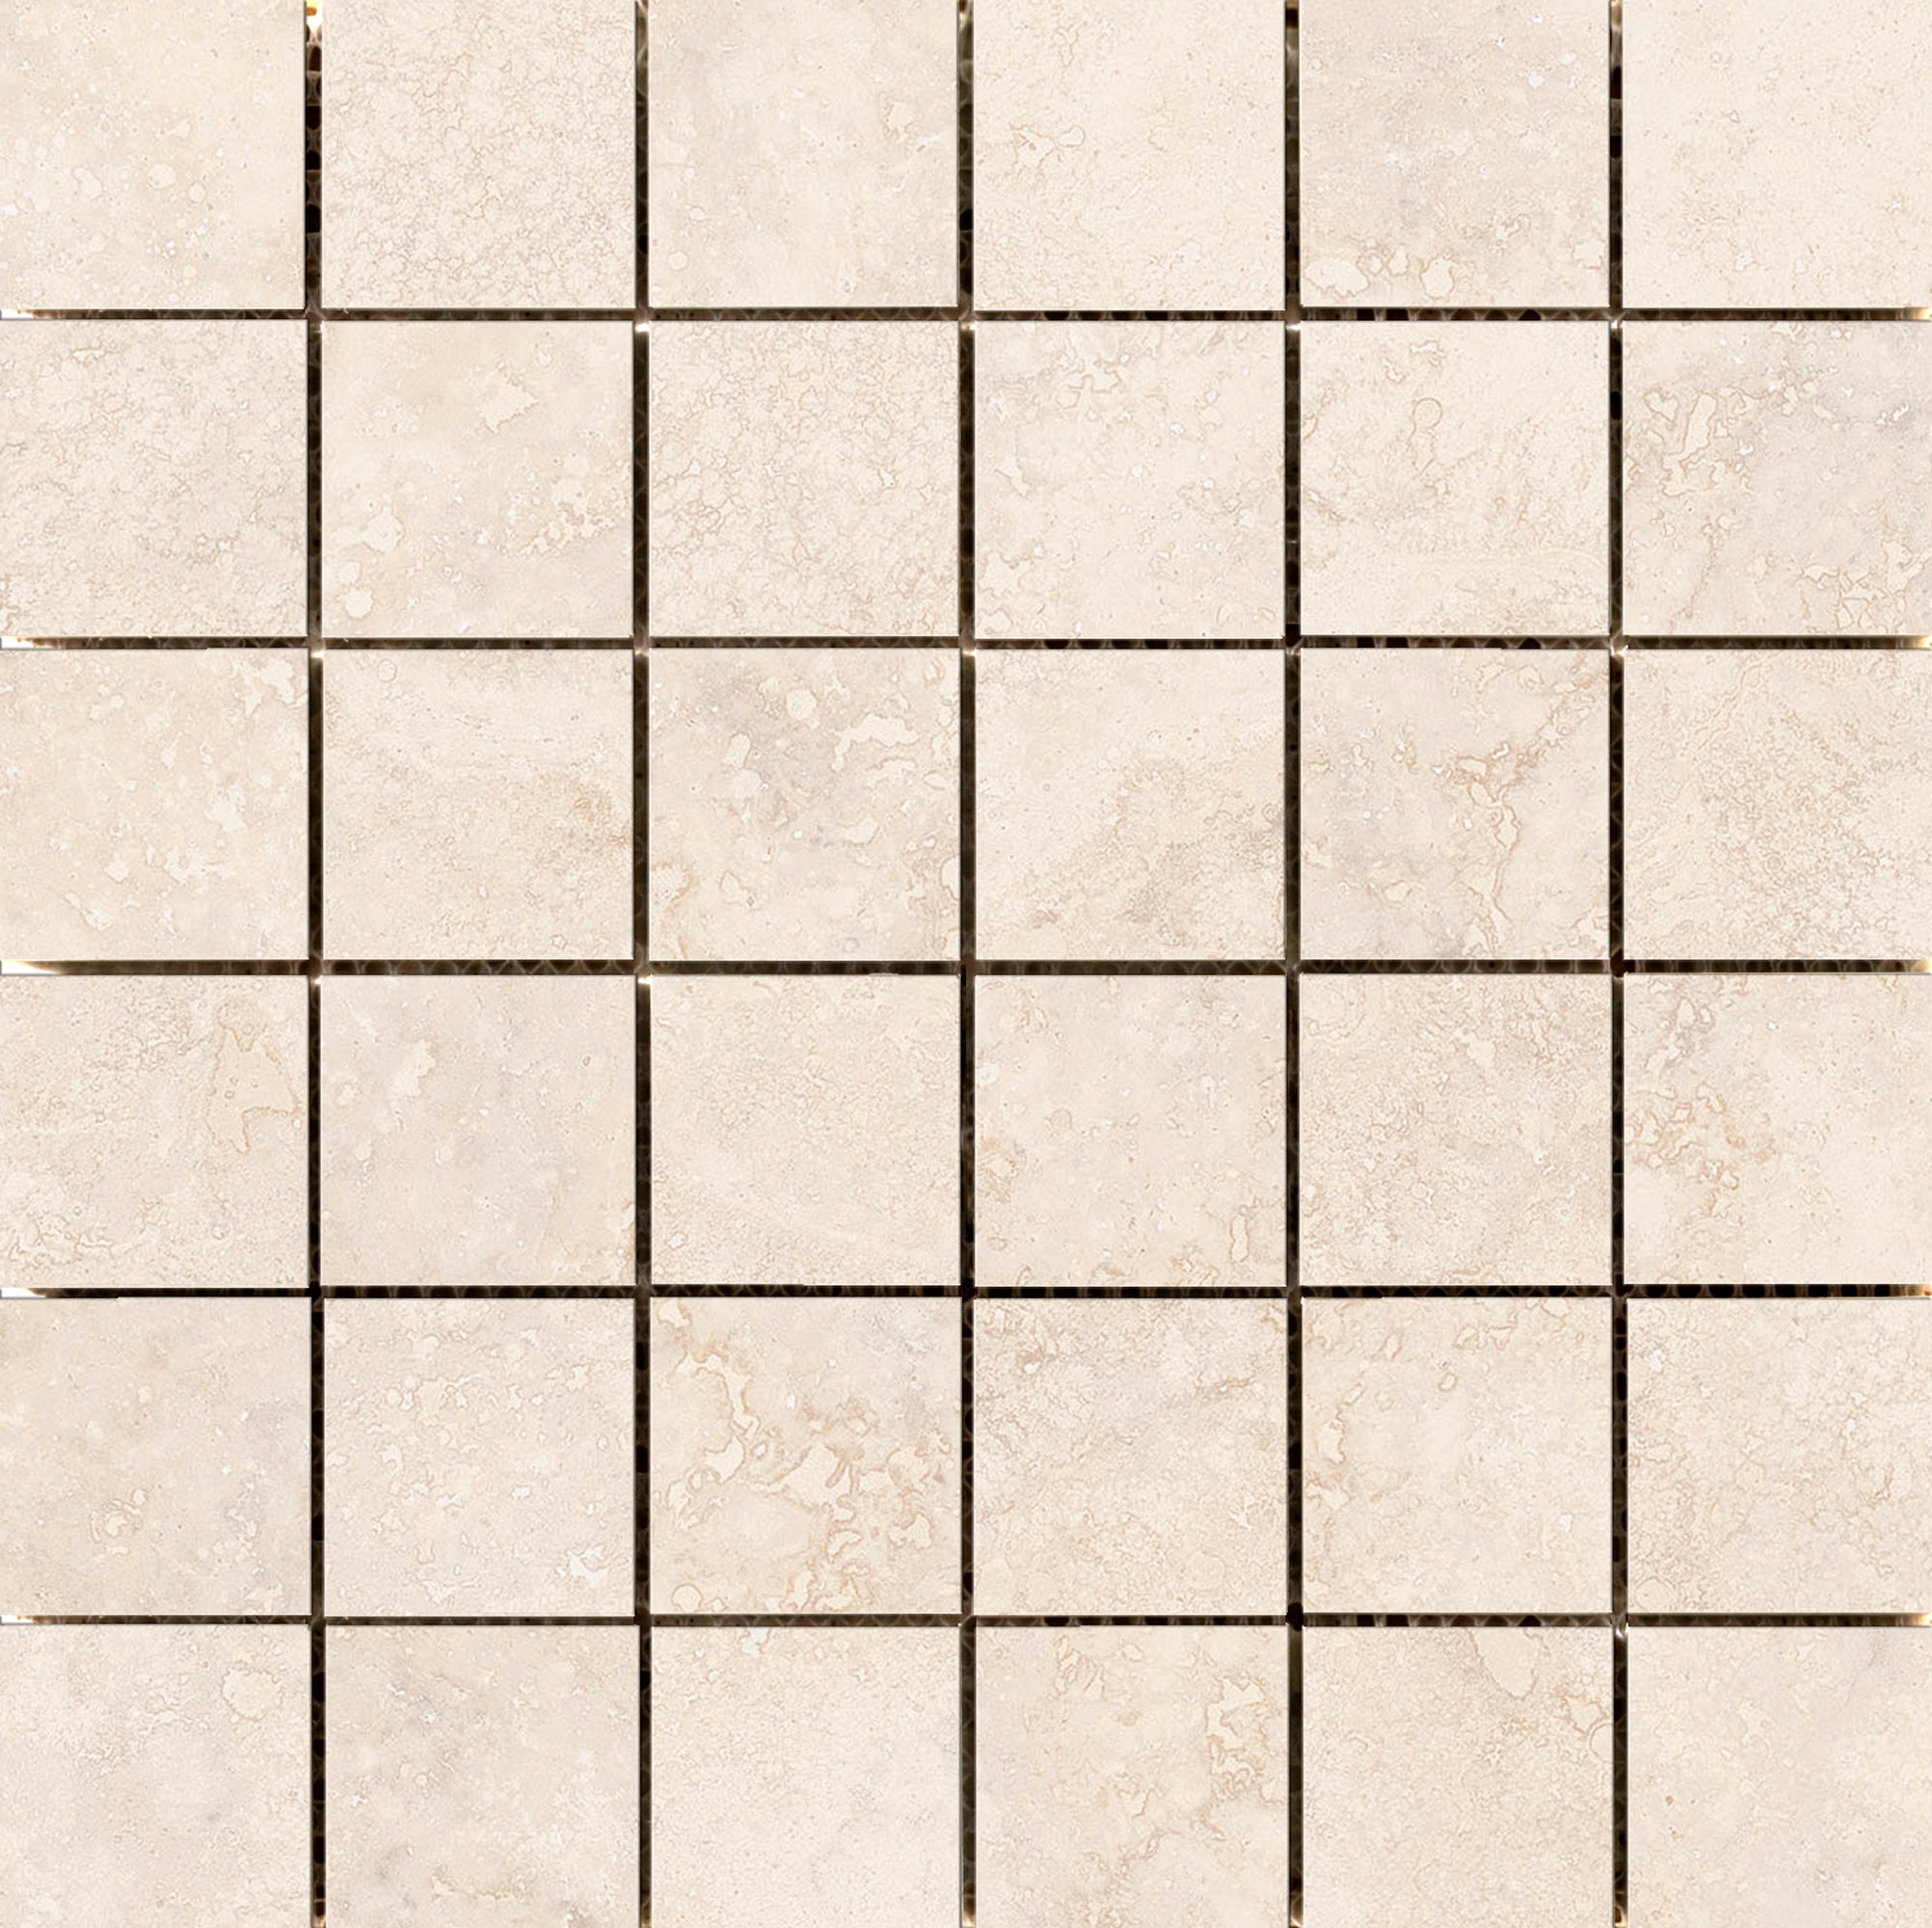 Emser COSTA Sand mosaic 2X2/12X12 ceramic tile is an Emser Tile Product. 